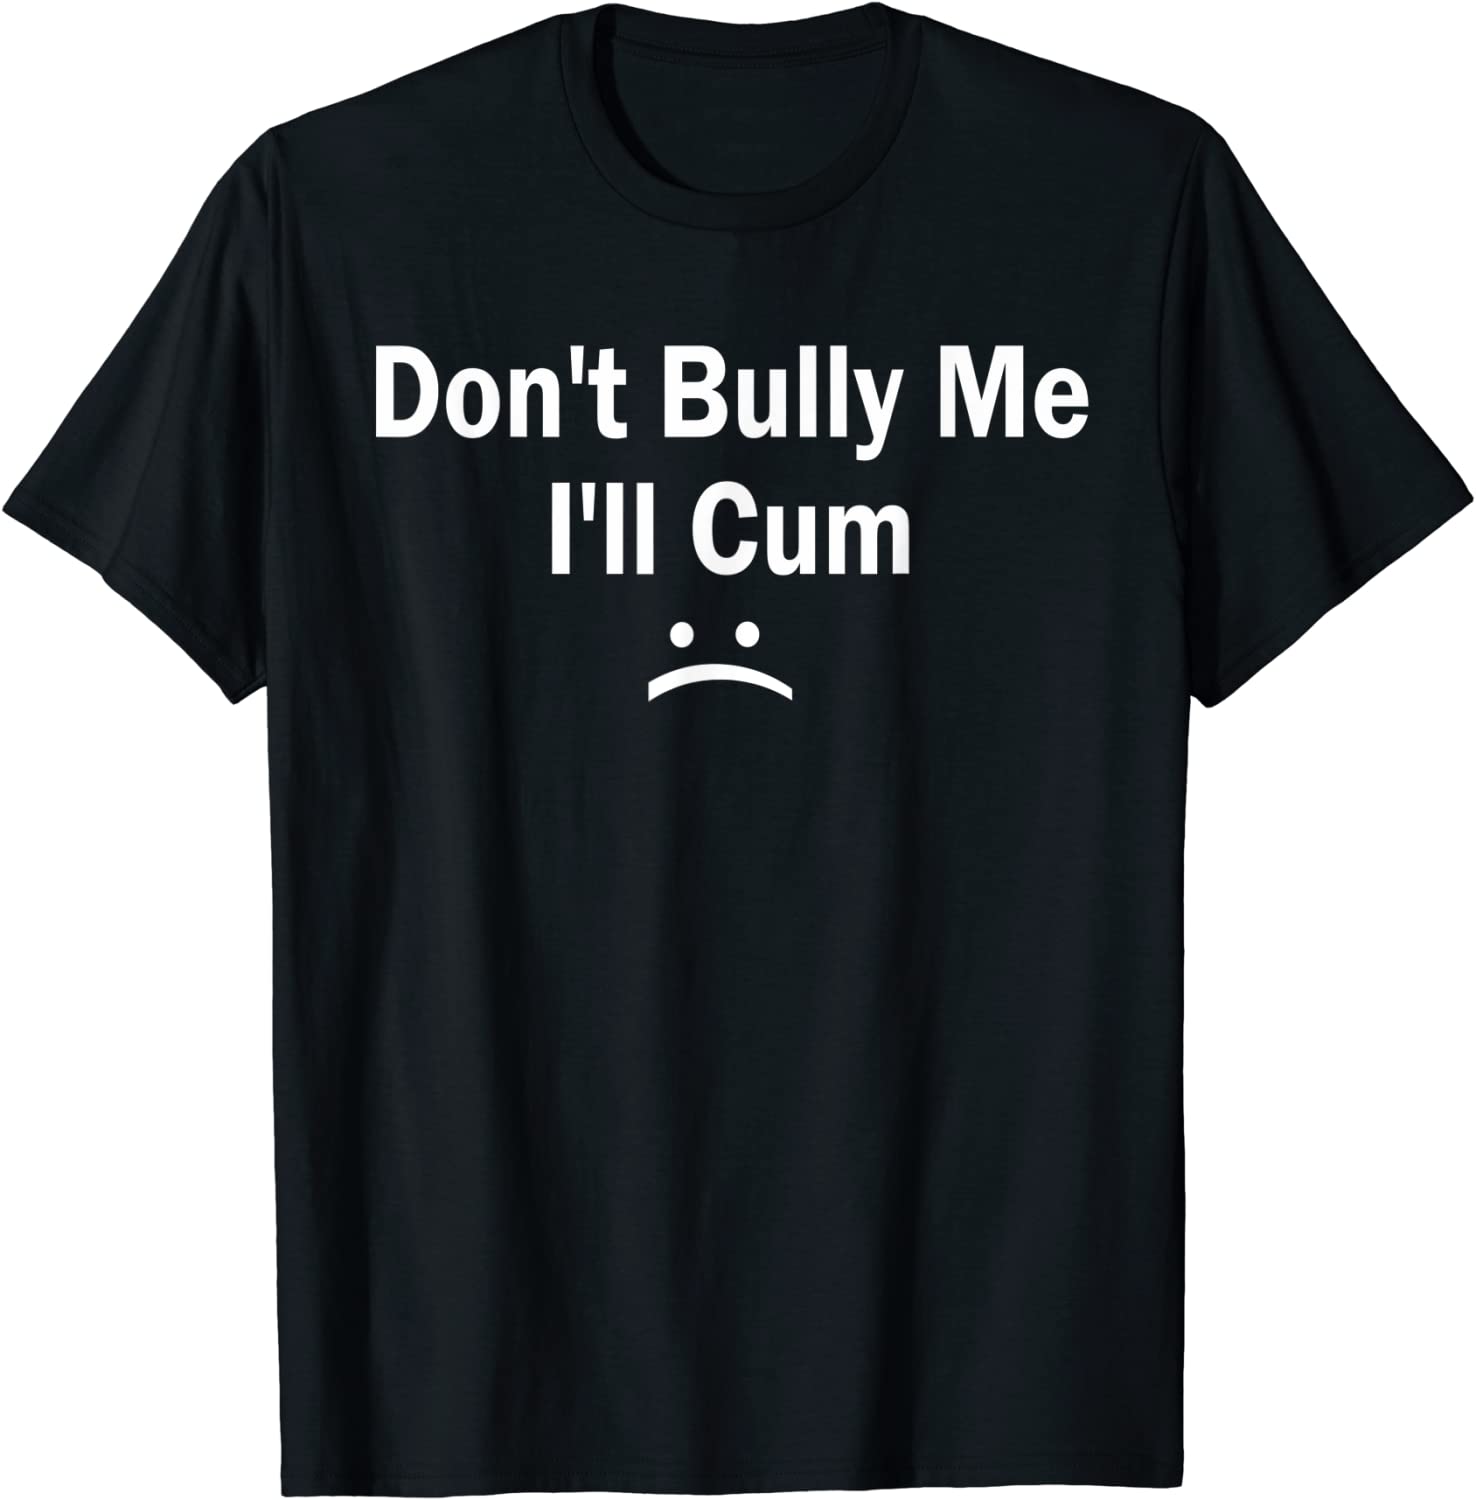 Don't Bully Me I'll Cum (54)